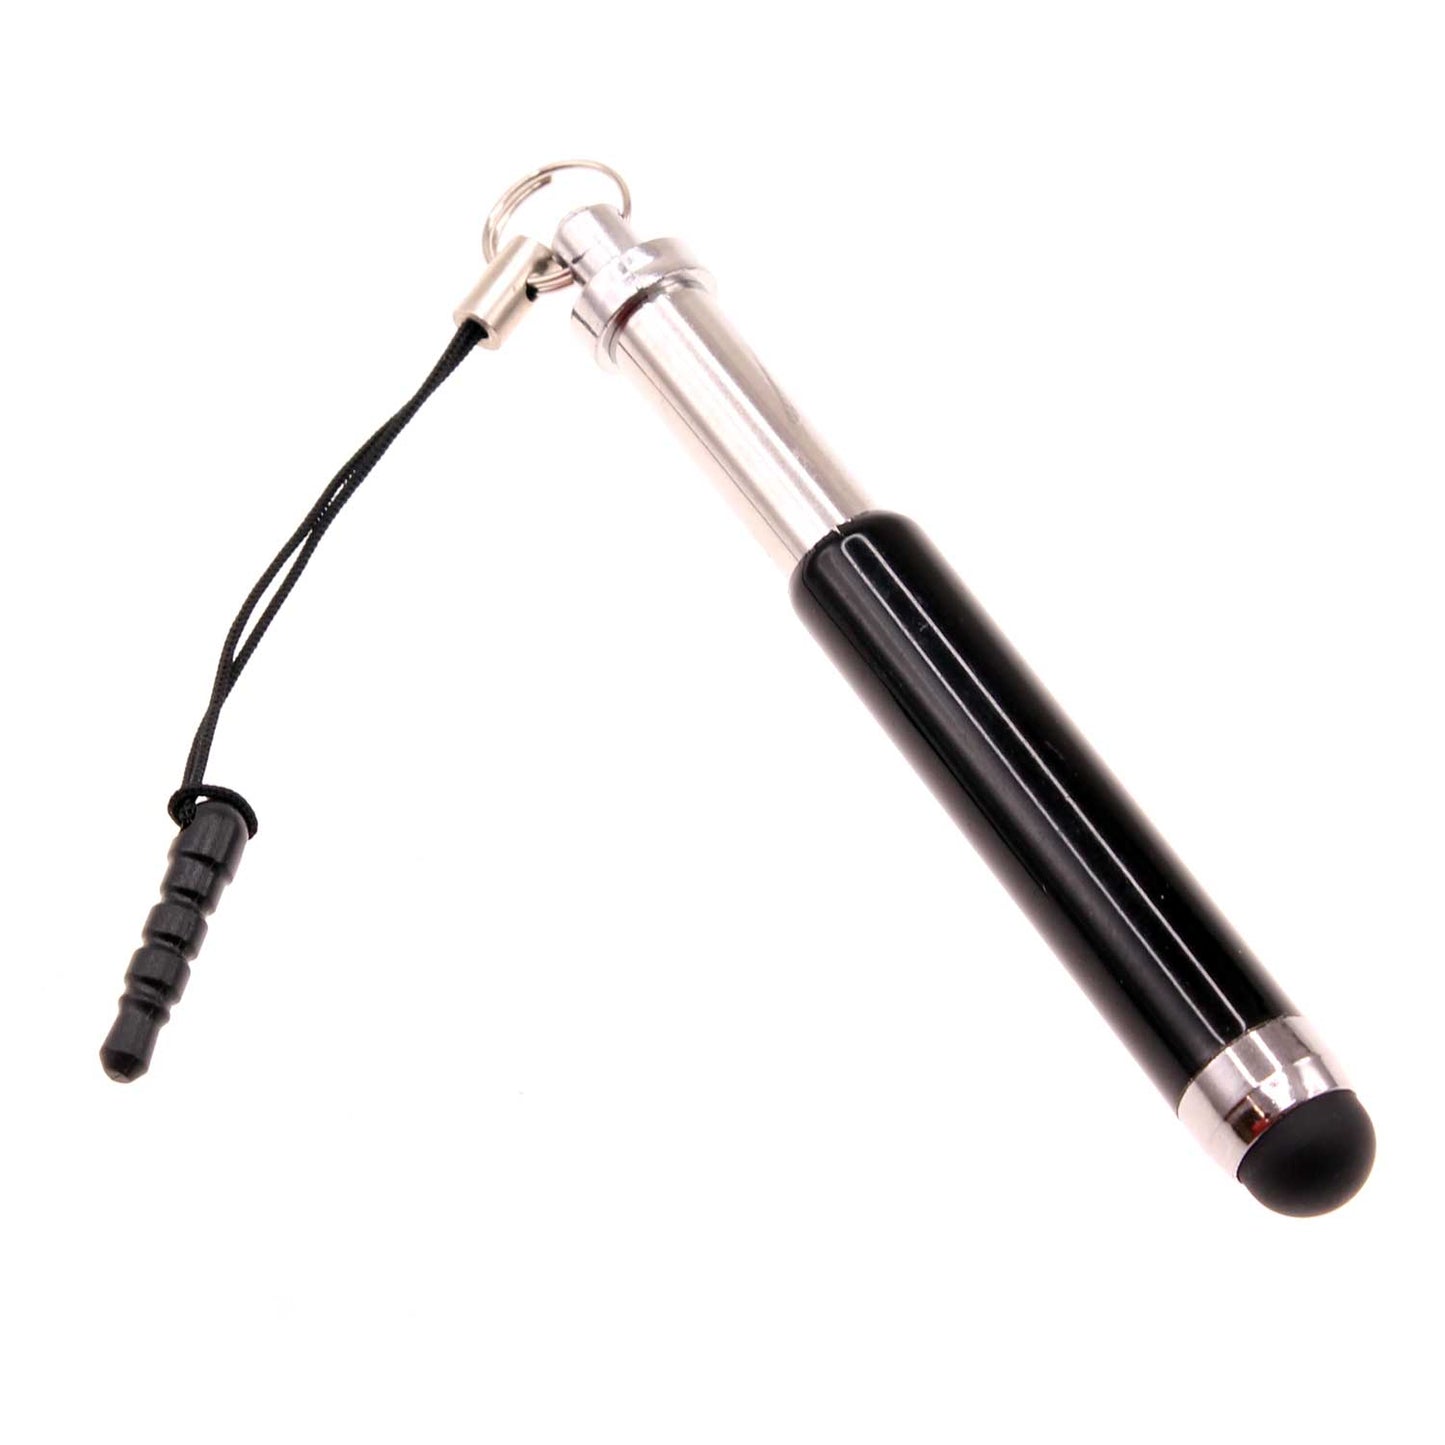 Black Stylus, Lightweight Compact Extendable Touch Pen - NWZ12